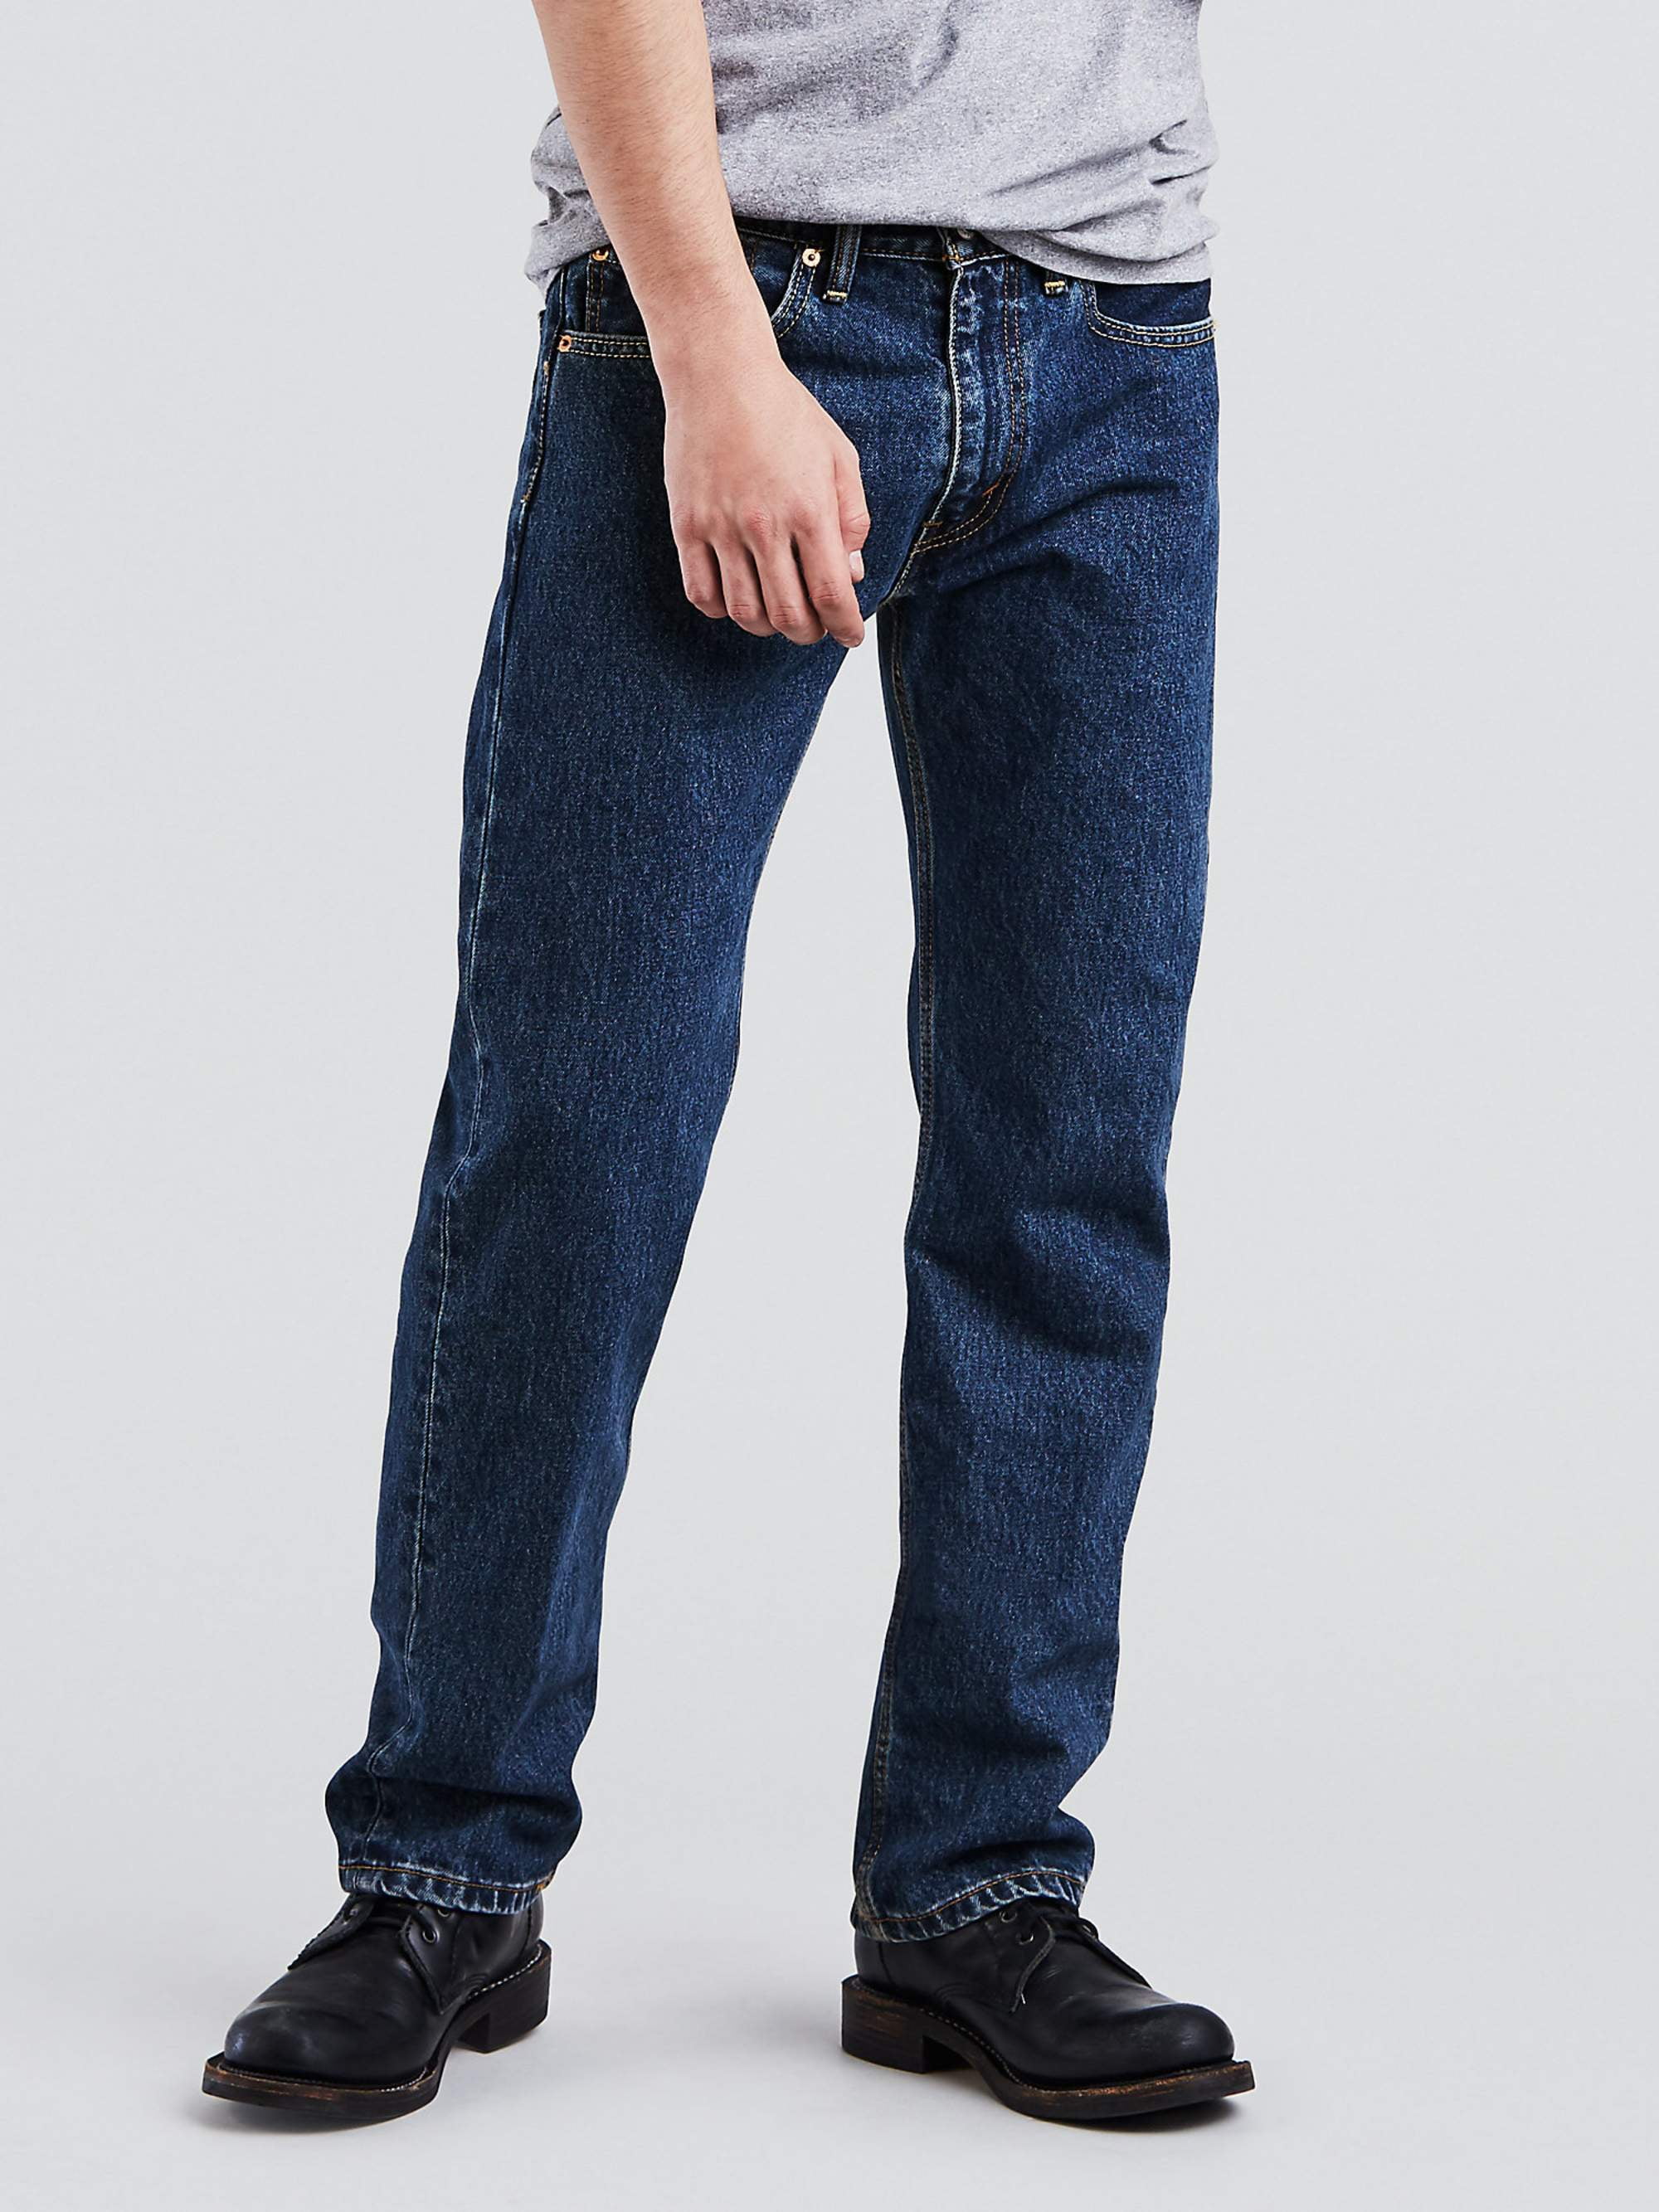 505 jeans on sale